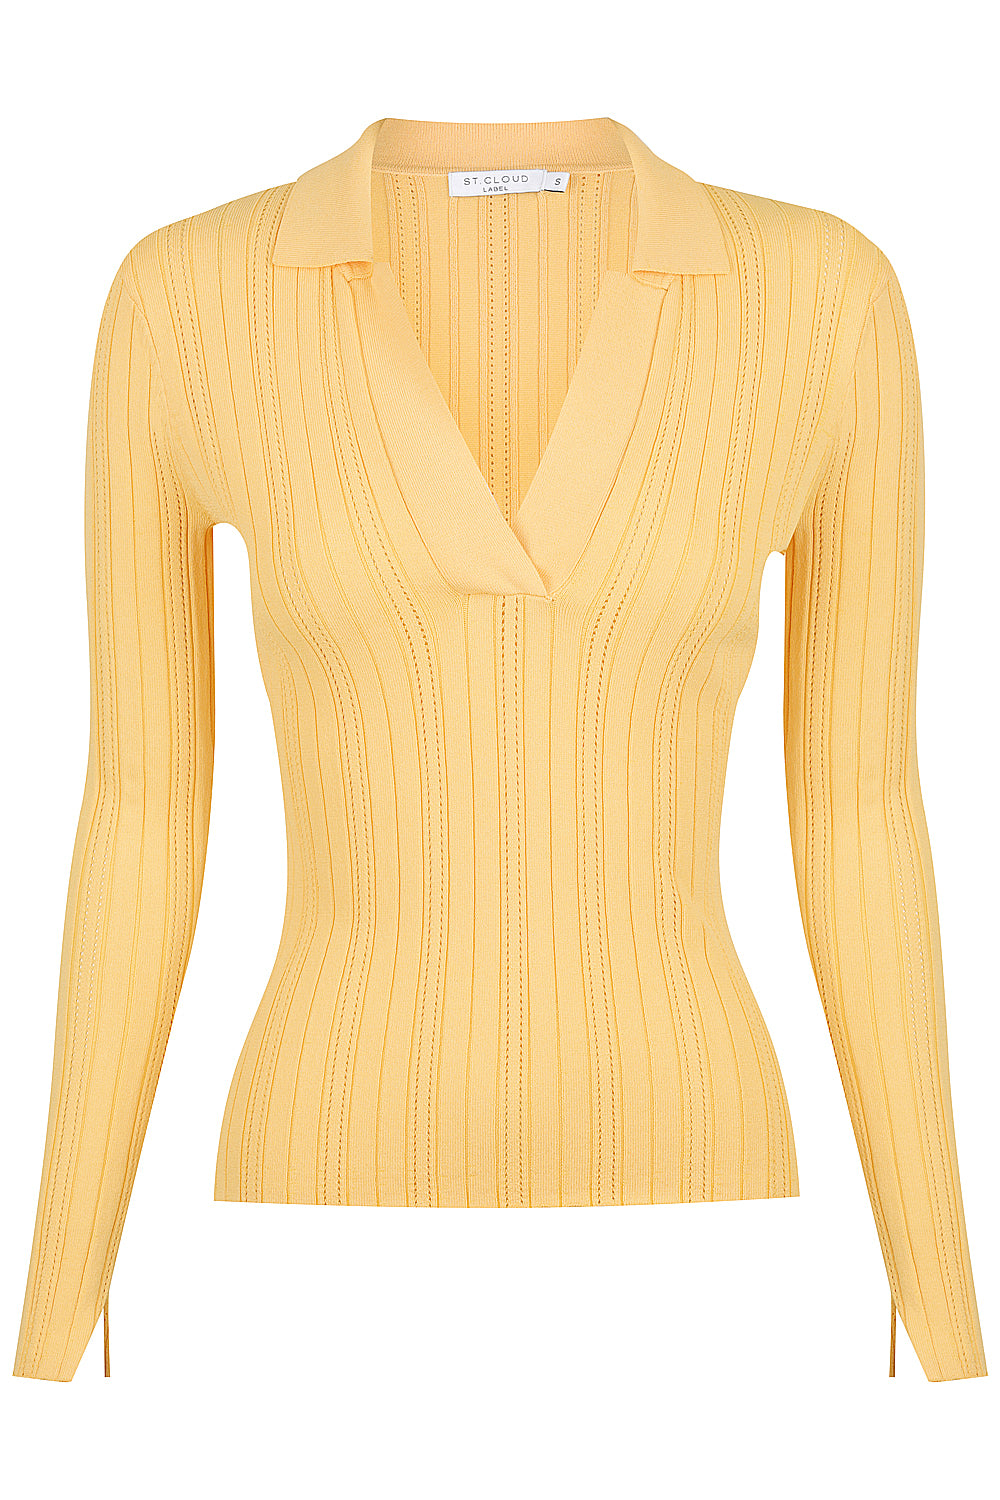 Women’s Yellow / Orange Kendall Stitch Knit Polo Top - Sherbert Large St Cloud Label